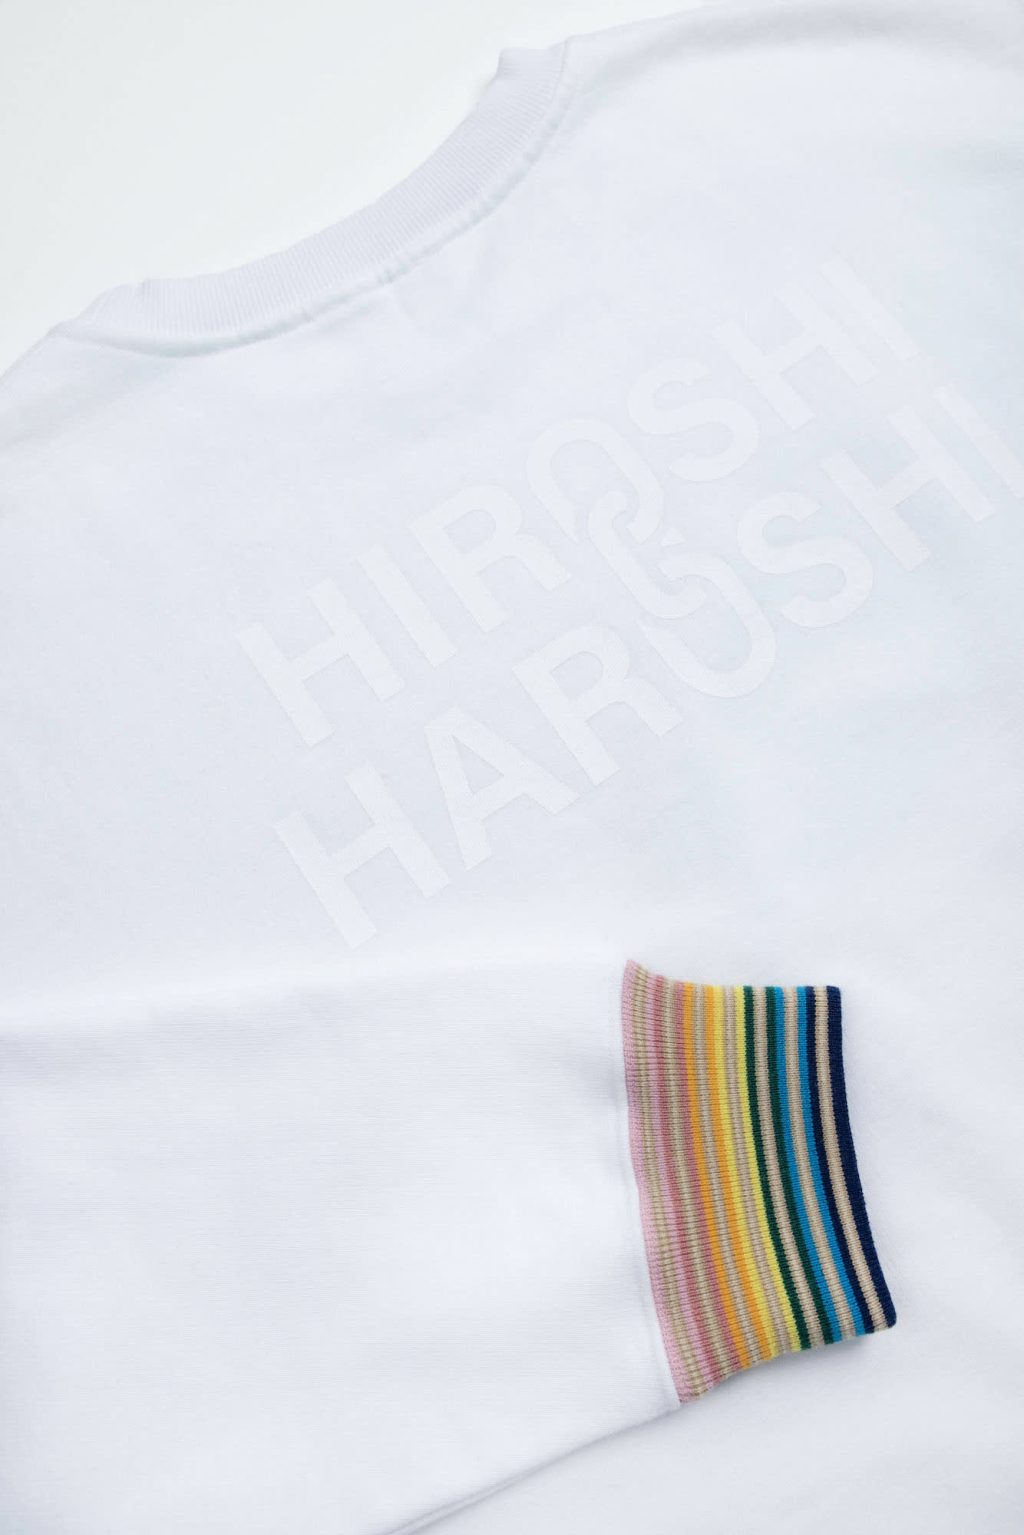 fragment-design-haroshi-collaboration-release-20211225